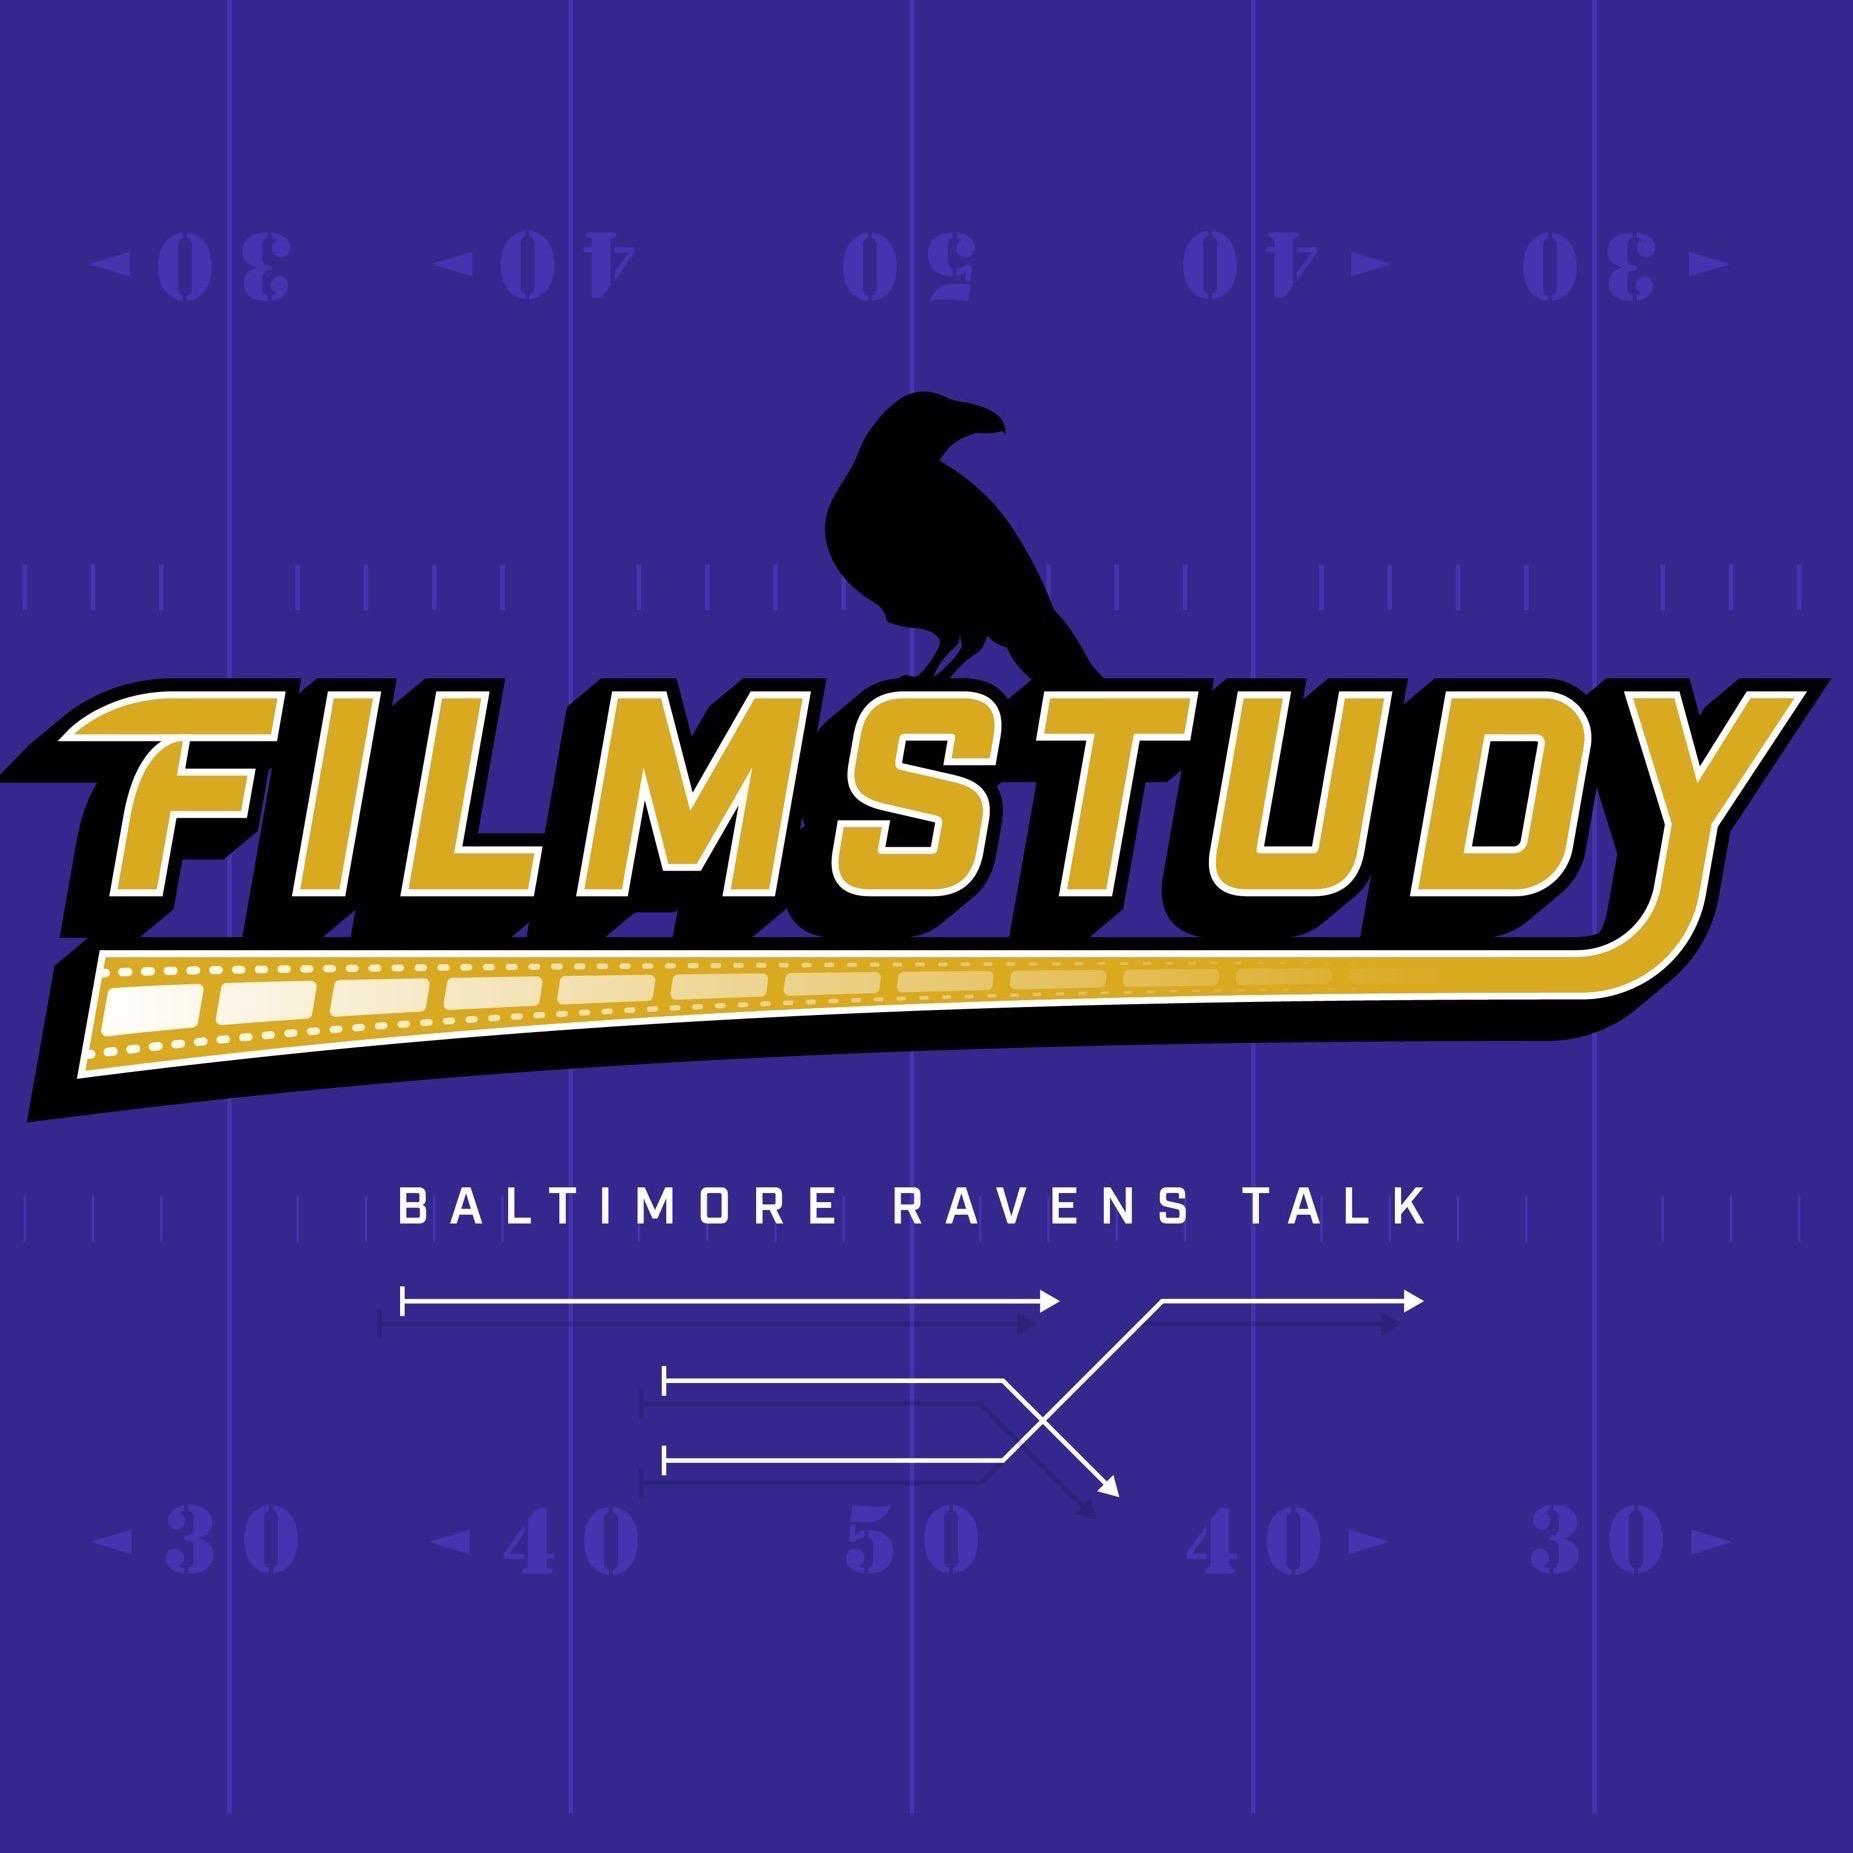 Filmstudy - Baltimore Ravens Talk